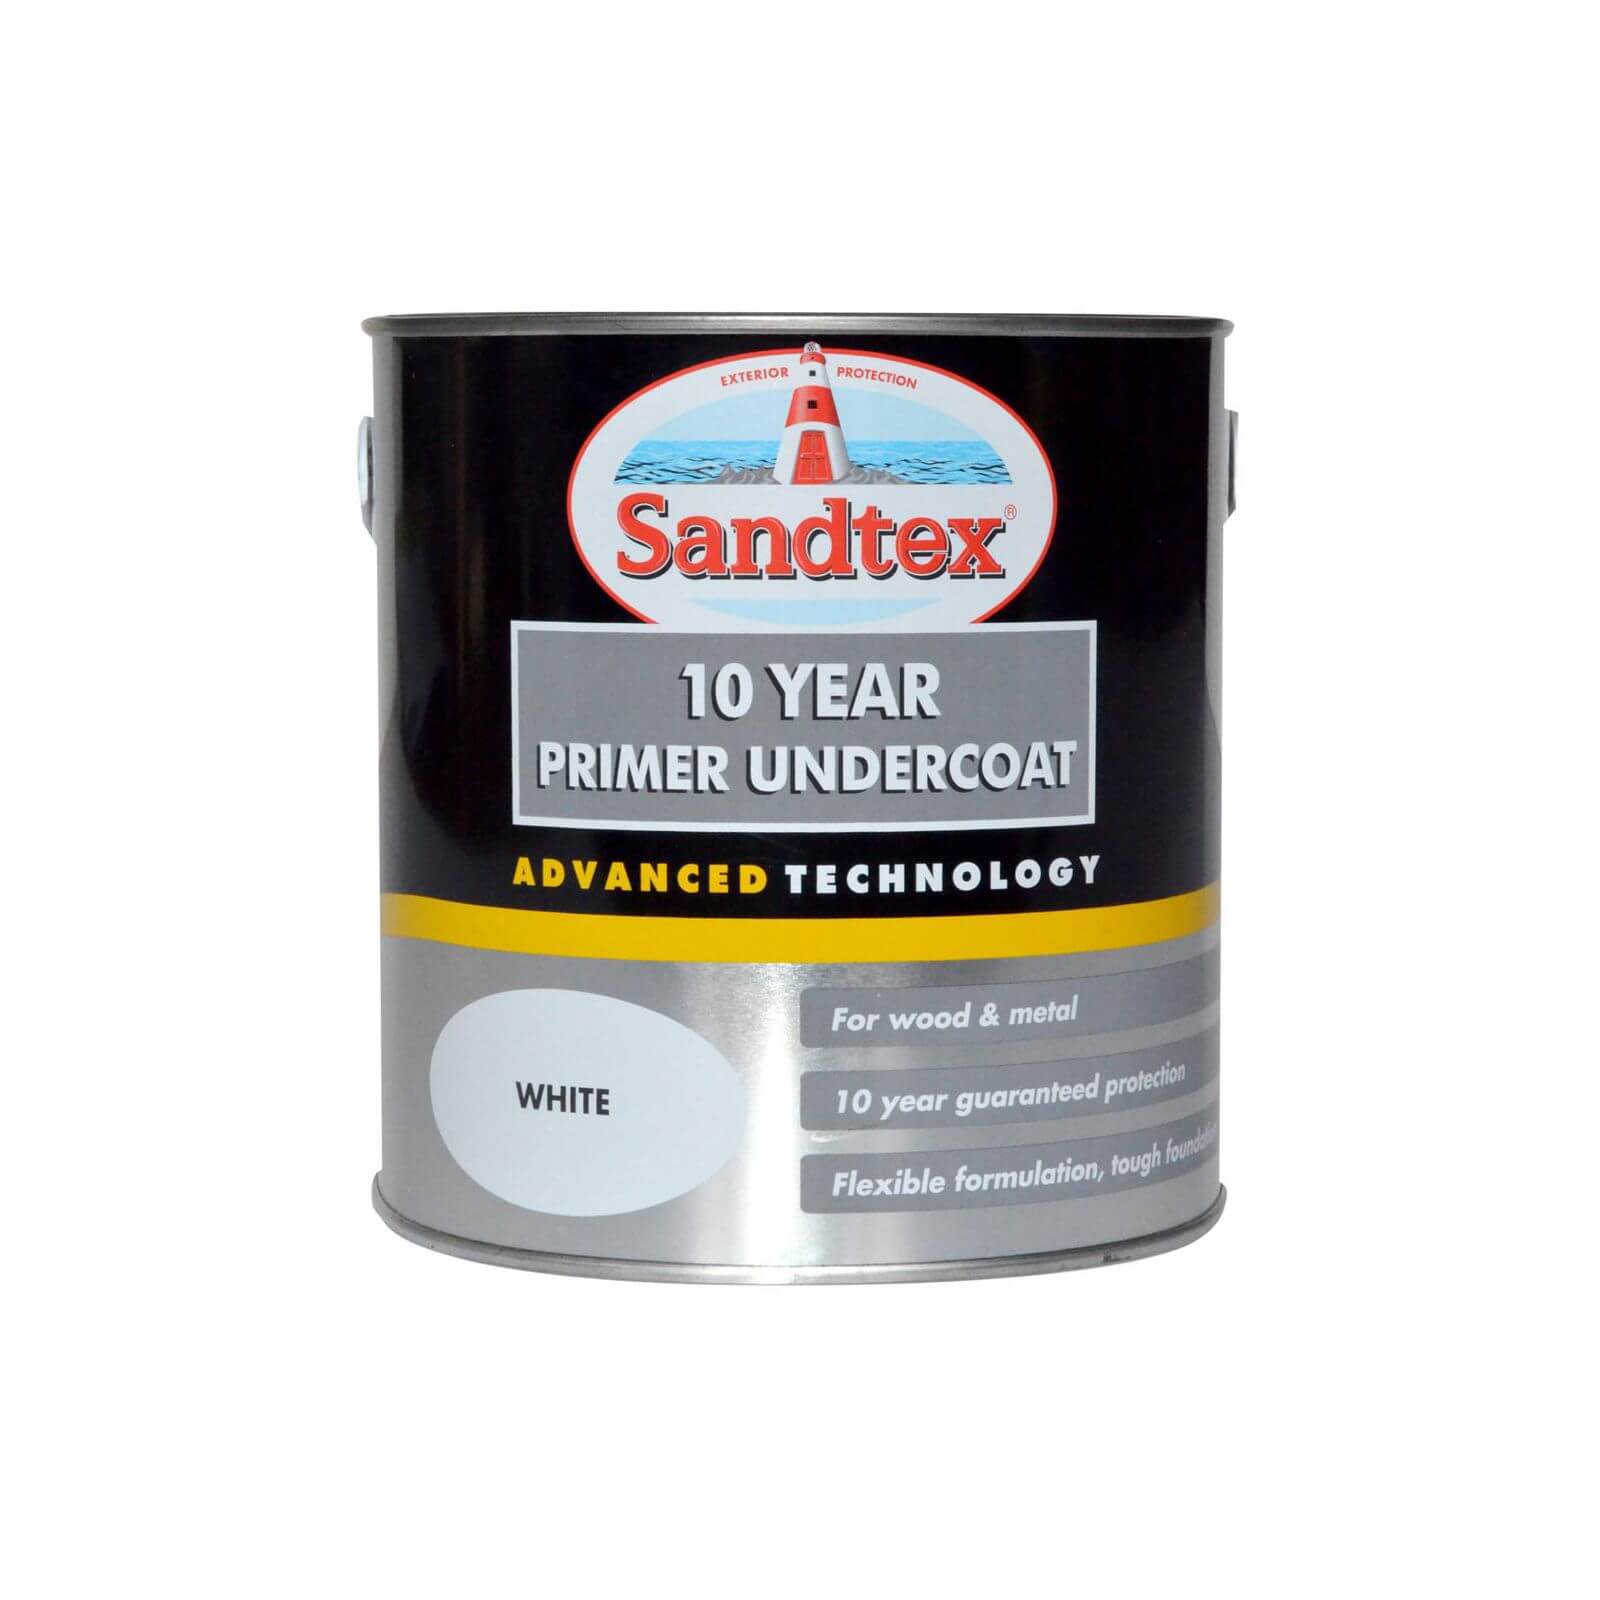 Sandtex 10 Year Primer Undercoat for Wood & Metal White - 2.5L